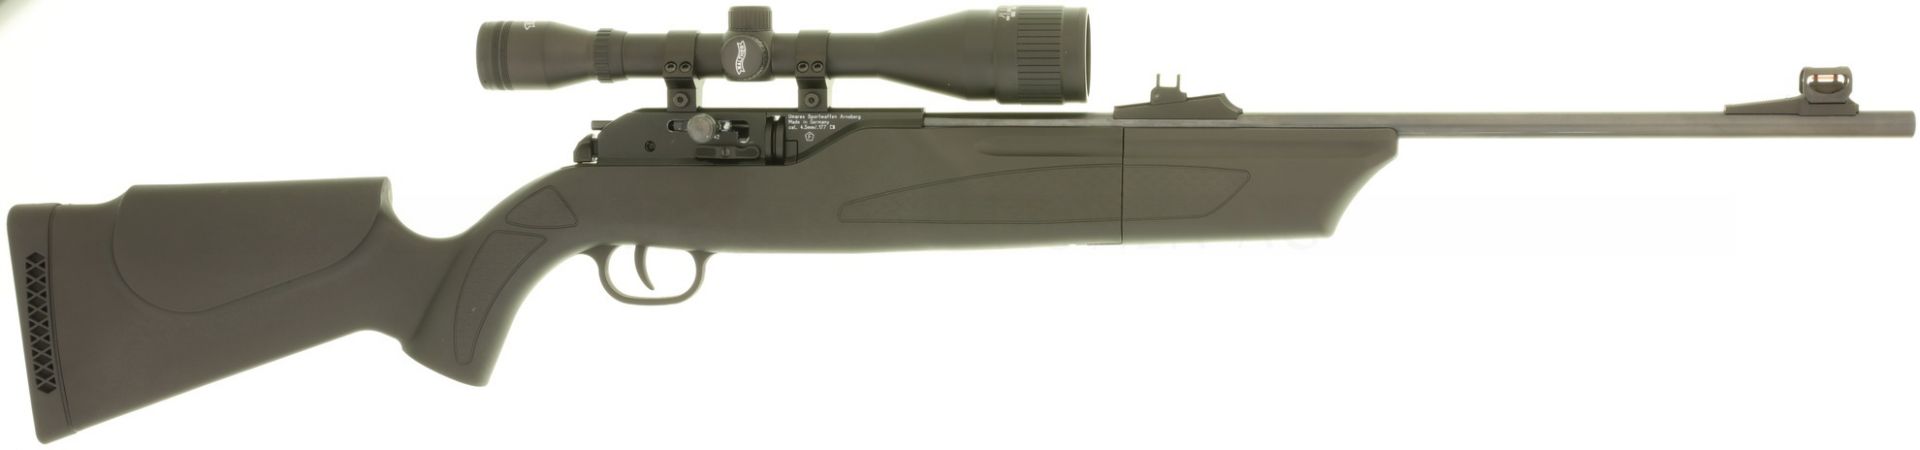 Co2-Repetiergewehr, Umarex, 850 AirMagnum, Kal. 4.5mm